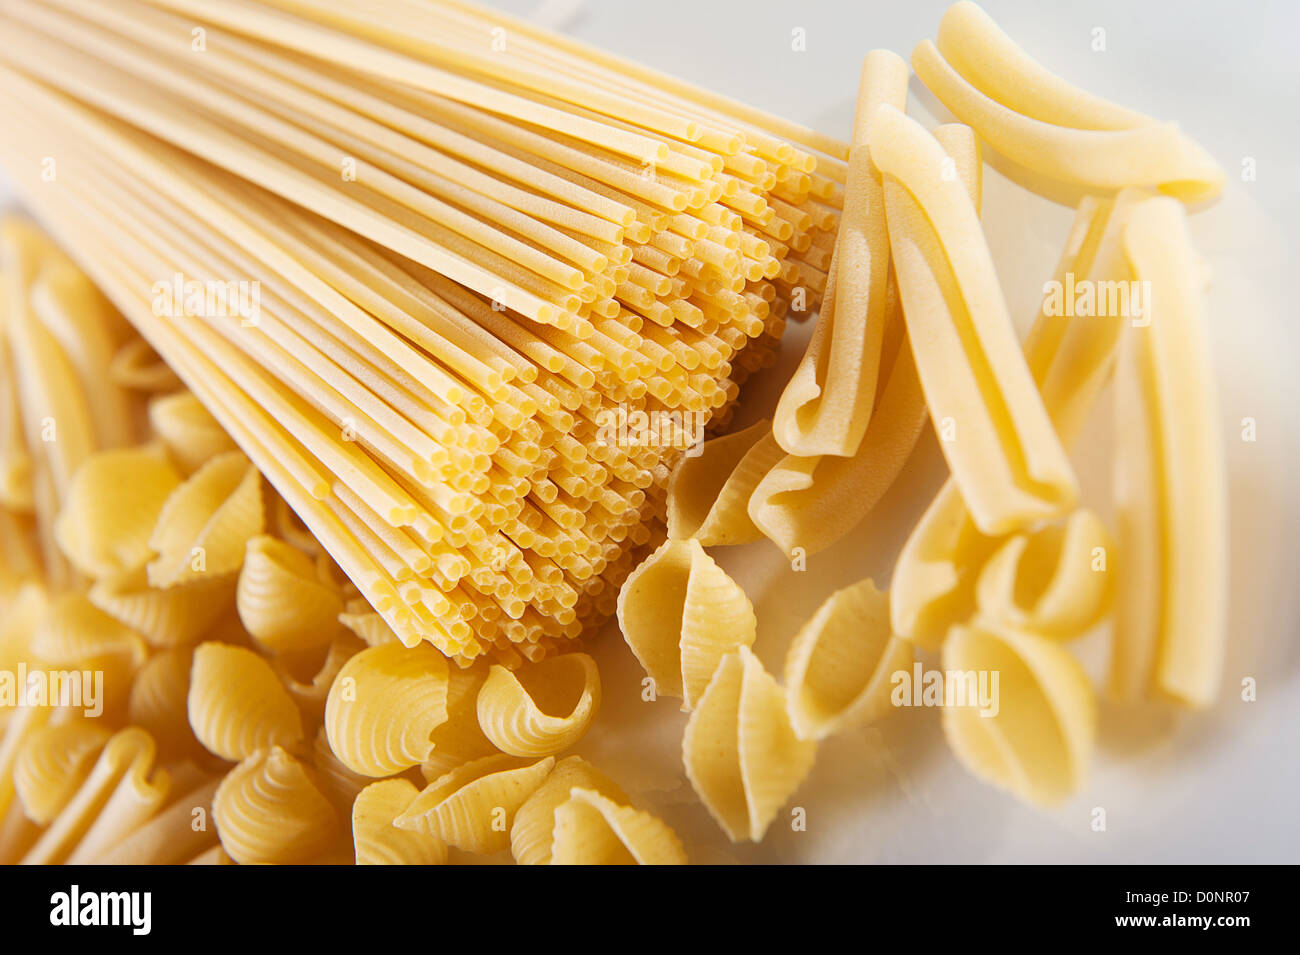 A bunch of wholegrain yellow spaghetti pasta Stock Photo